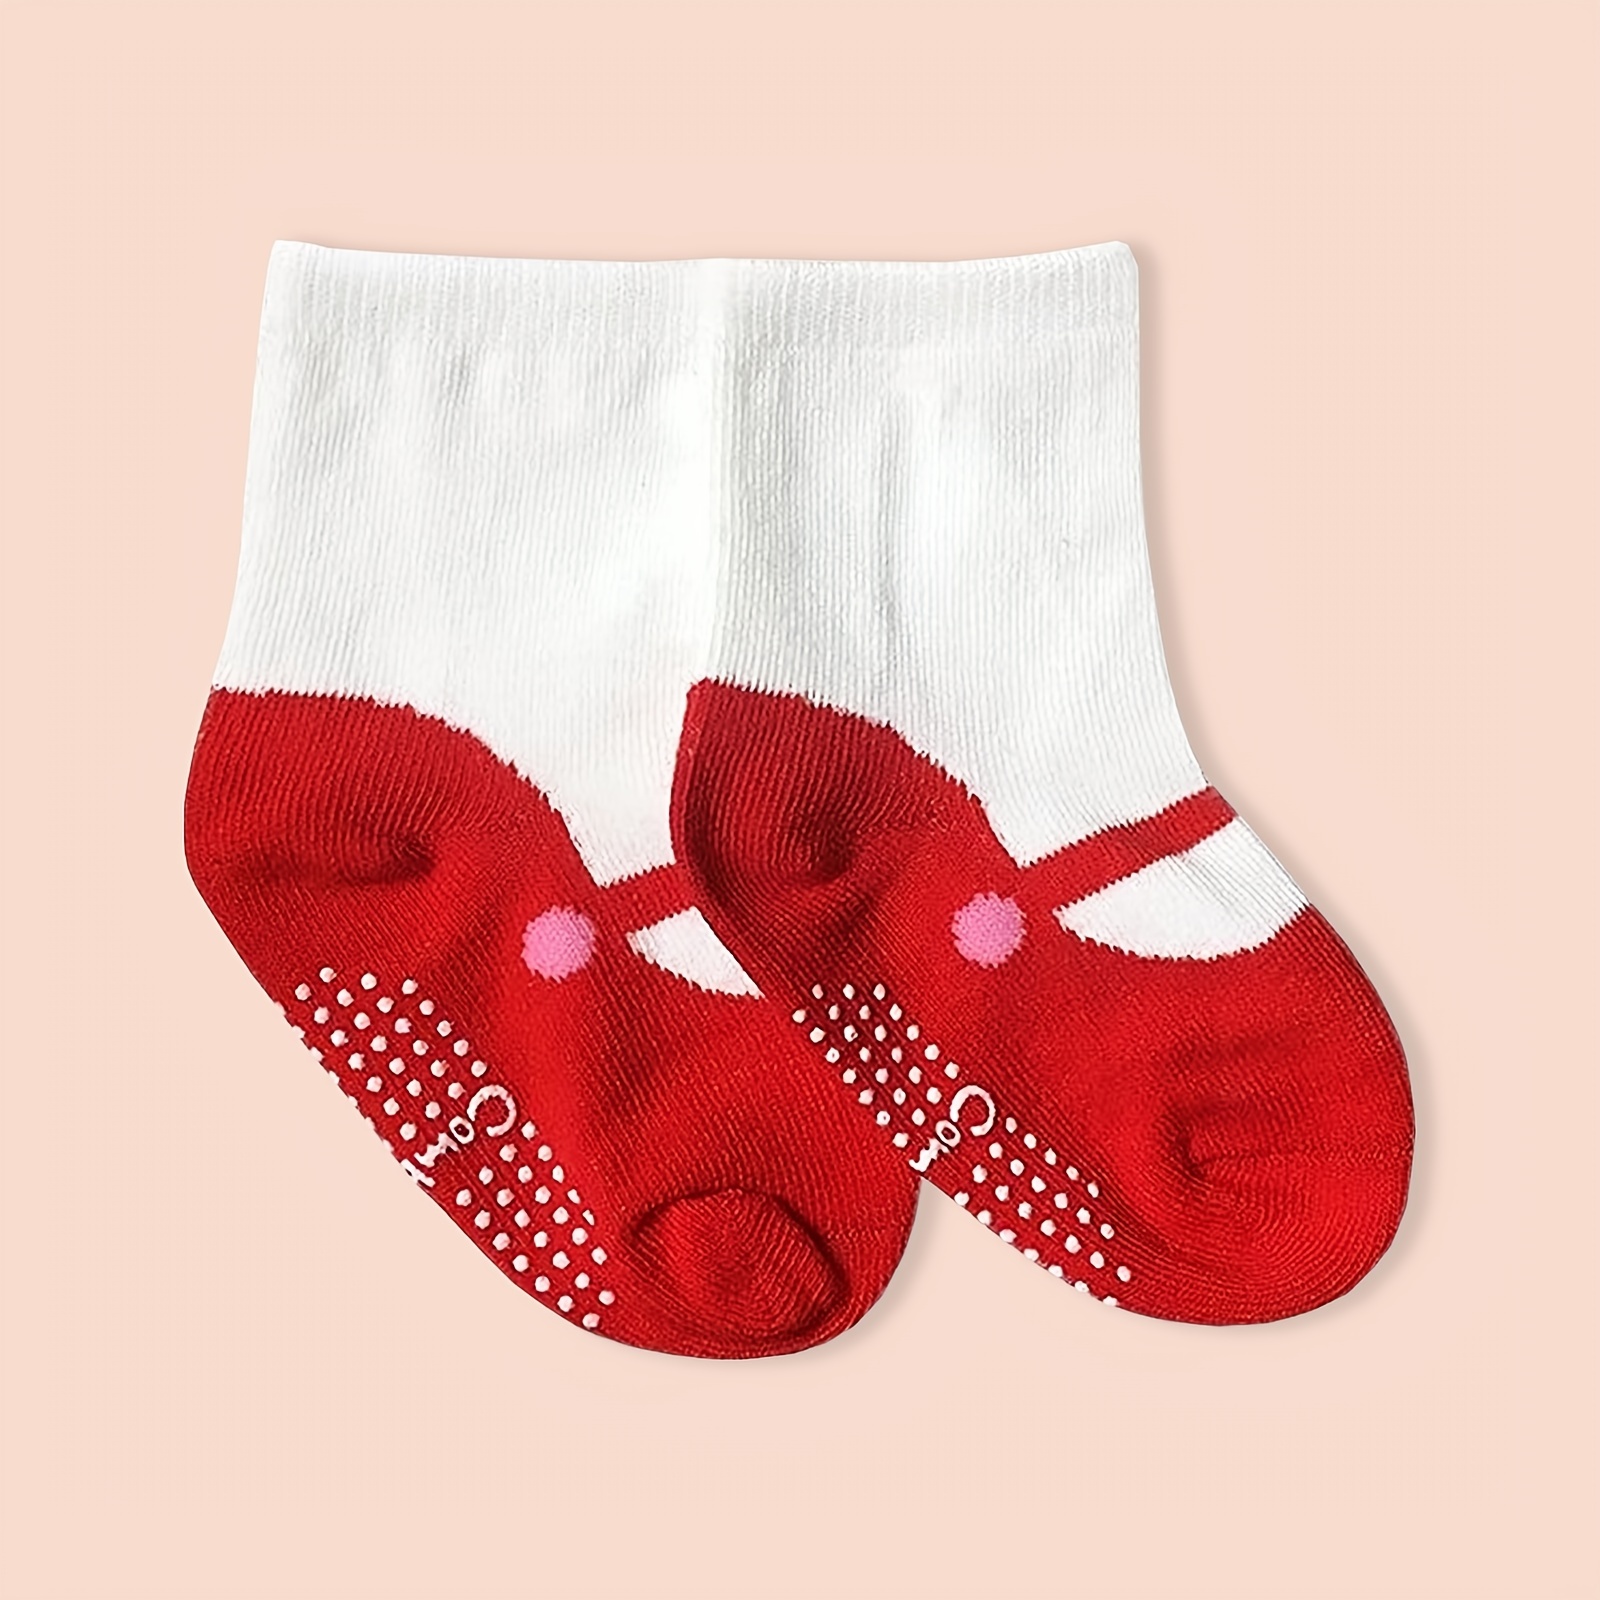 BEHELE Calcetines antideslizantes para bebé, calcetines antideslizantes  para niños y niñas, niños recién nacidos, 6 pares